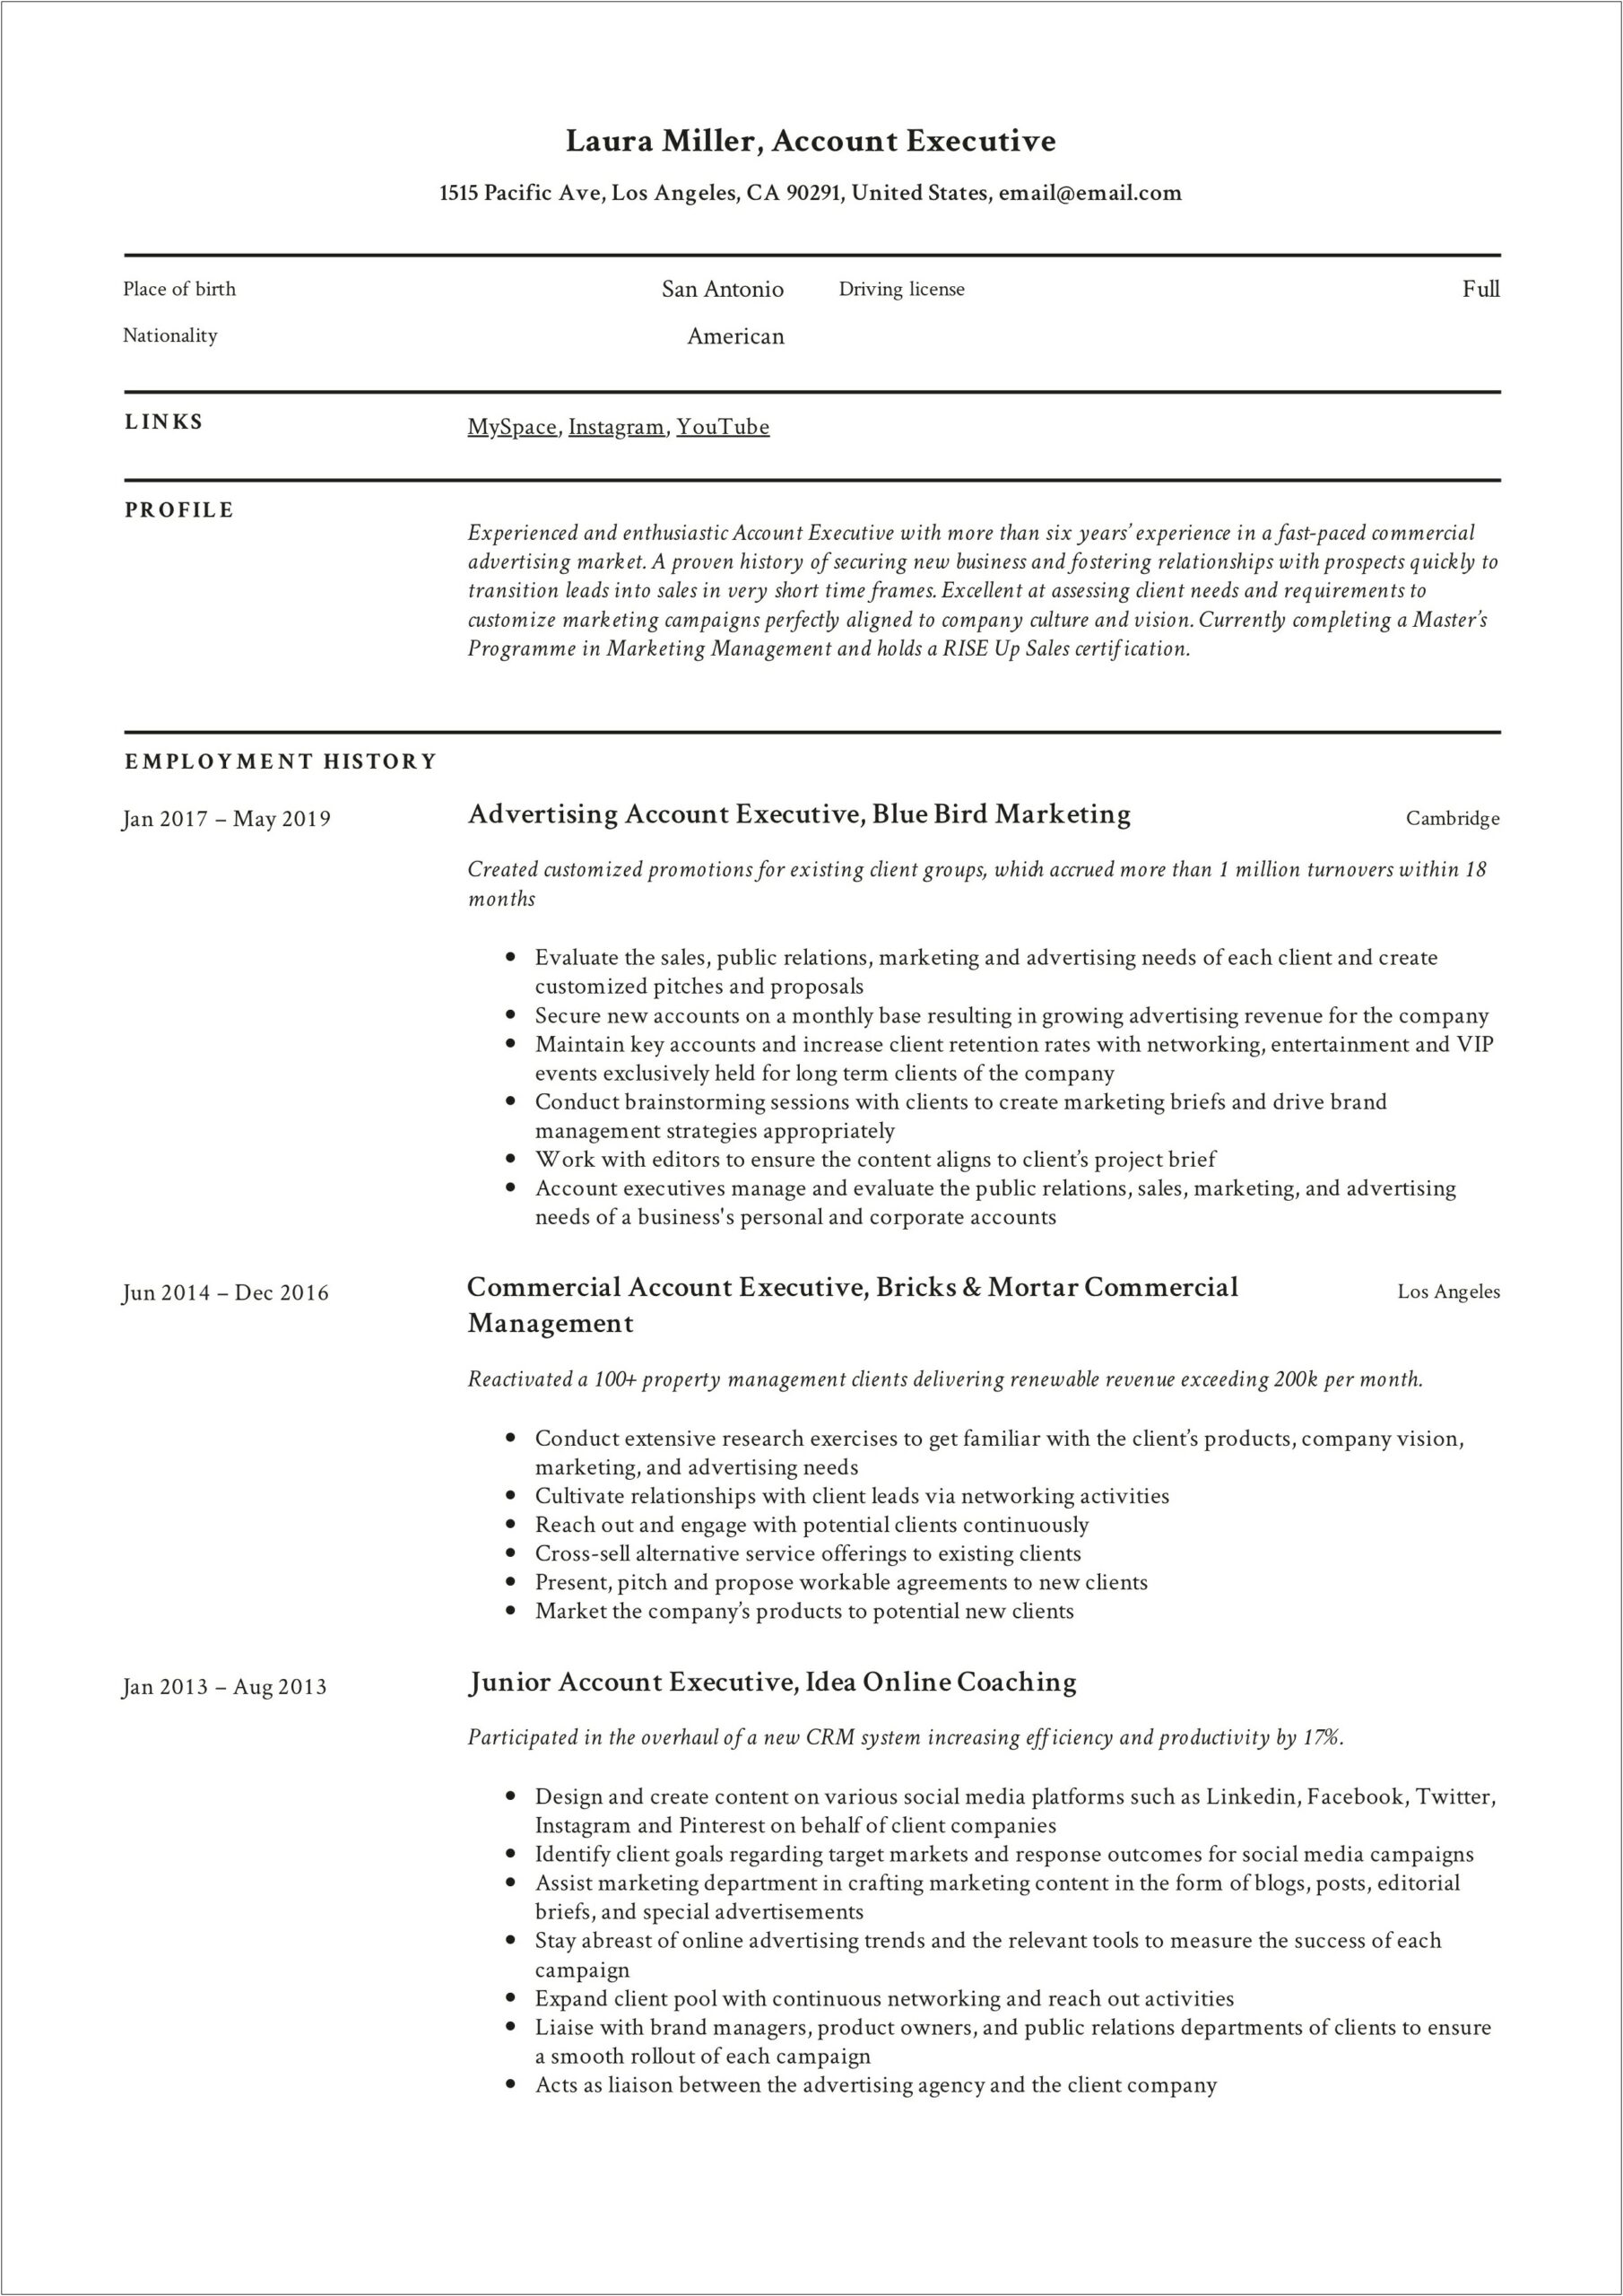 Sales Executive Job Description For Resume Pdf